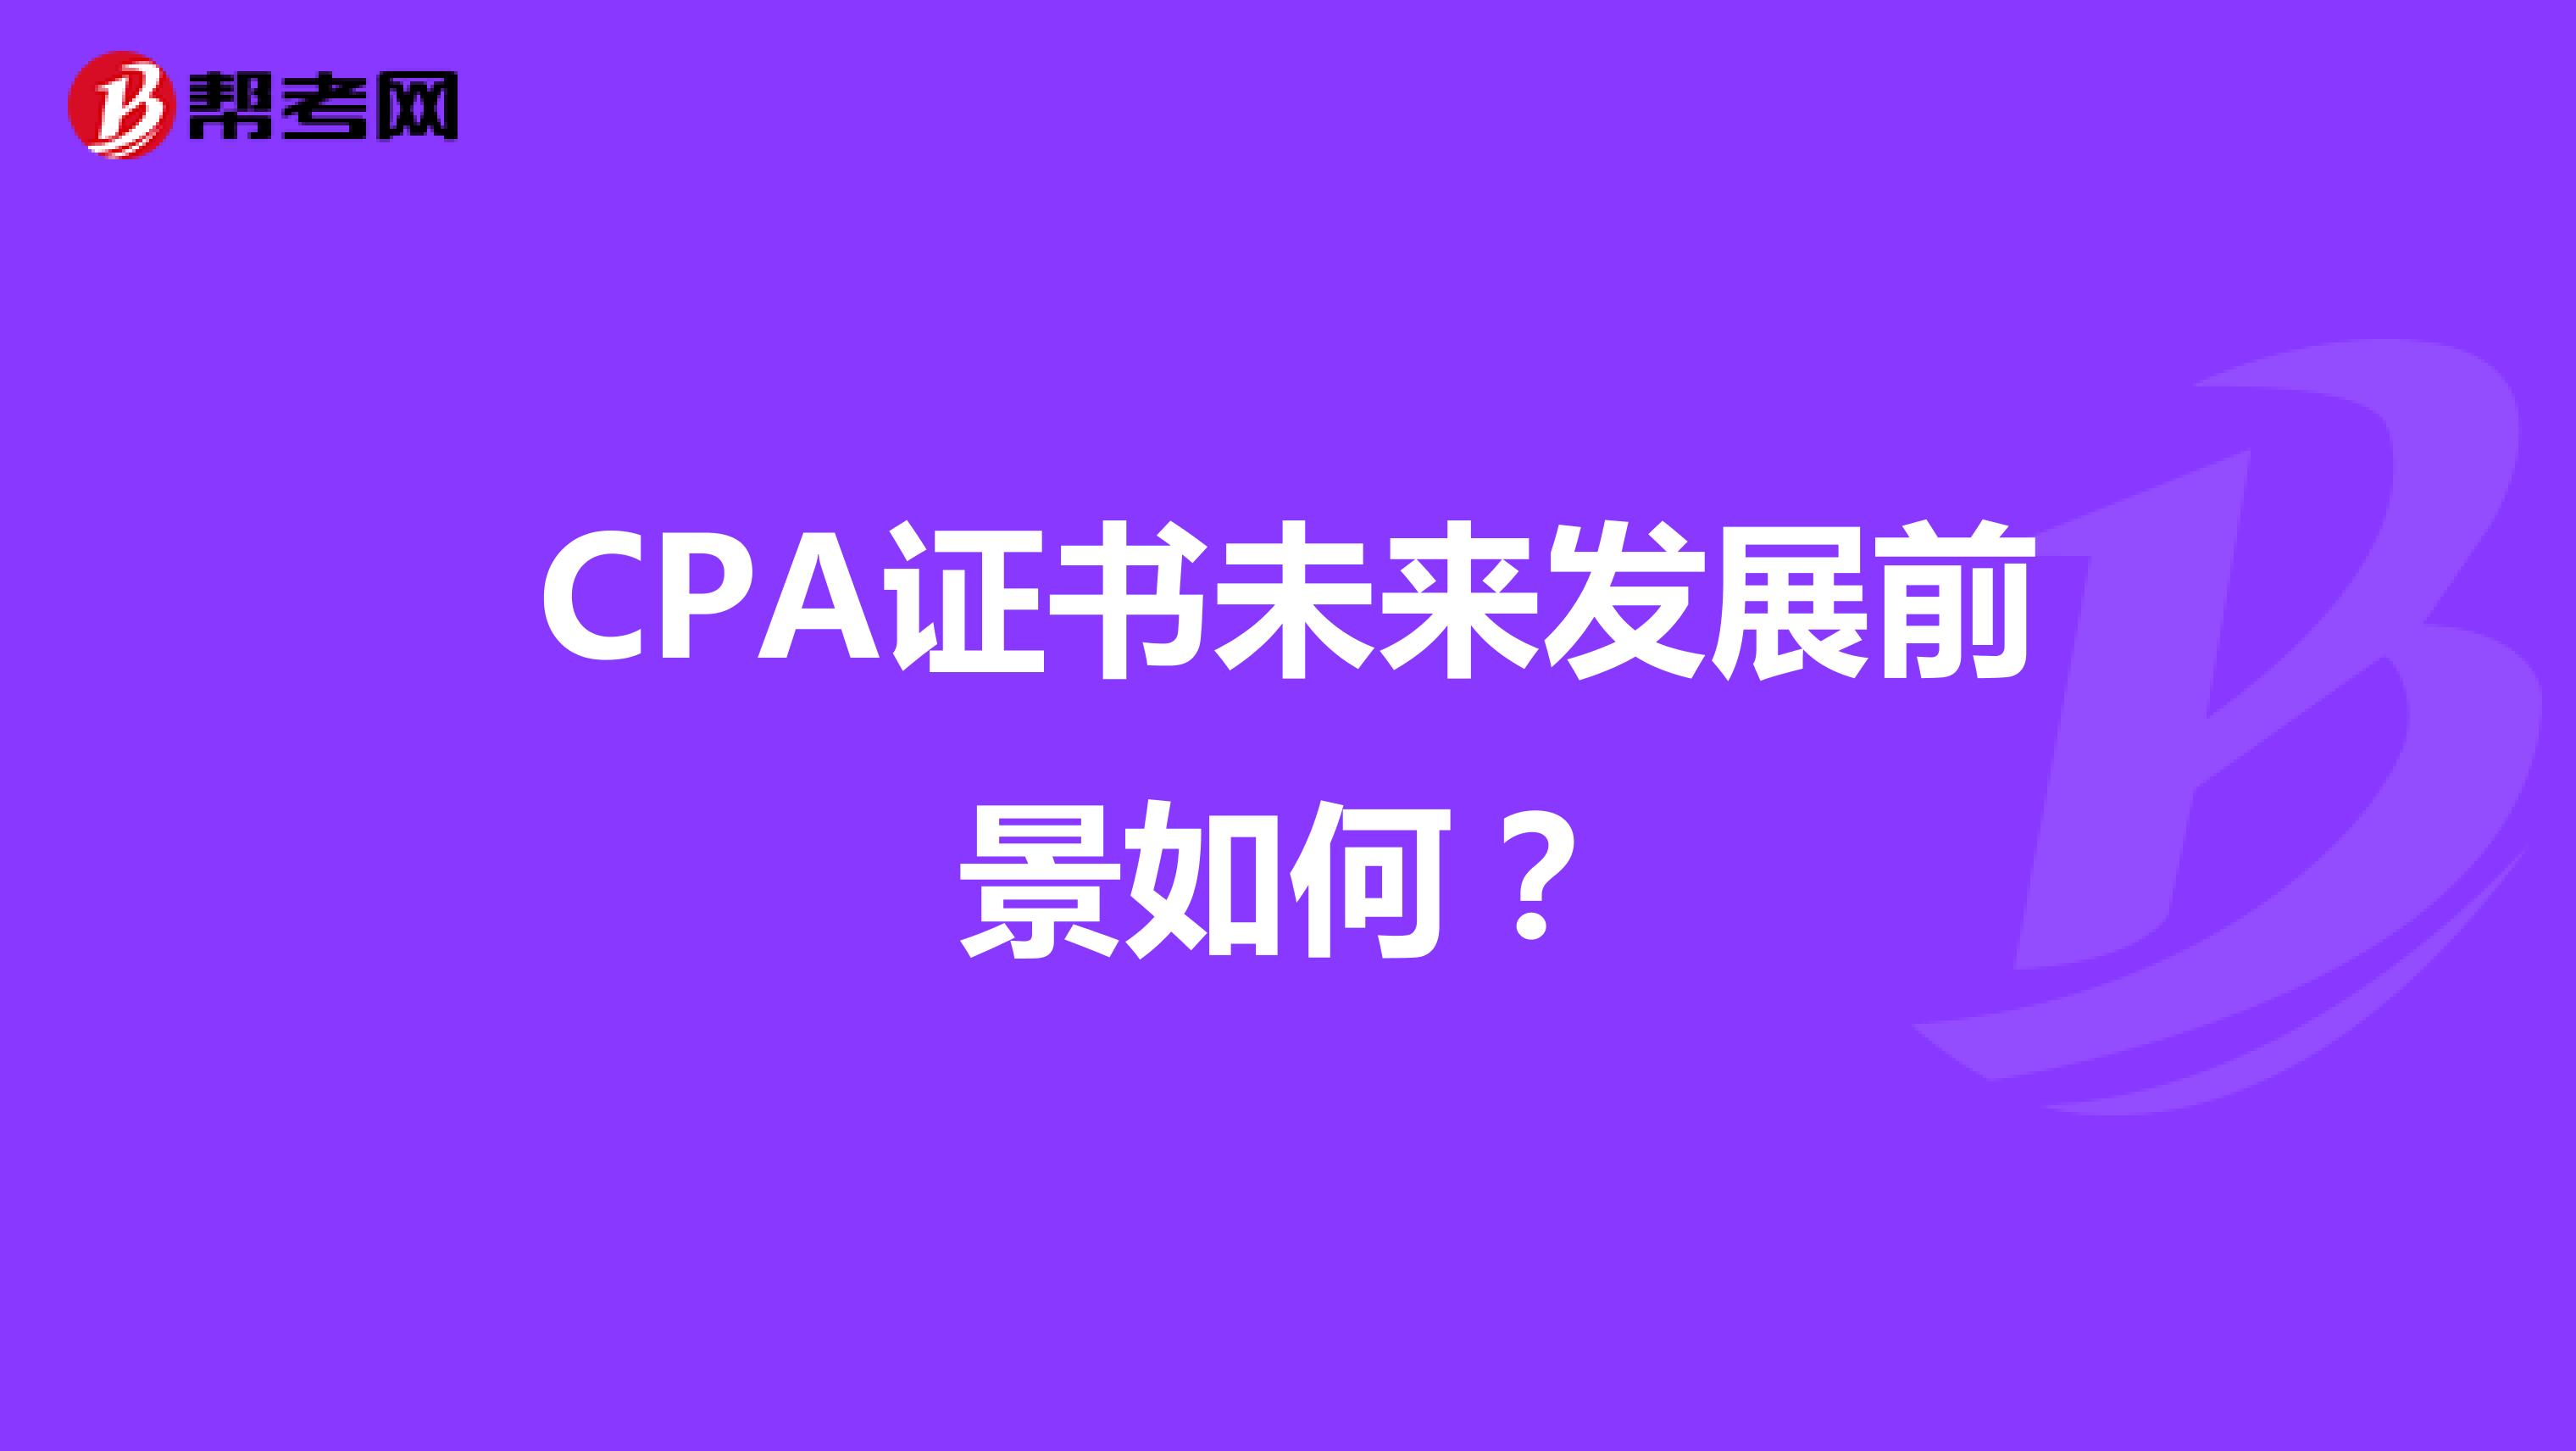 CPA证书未来发展前景如何？